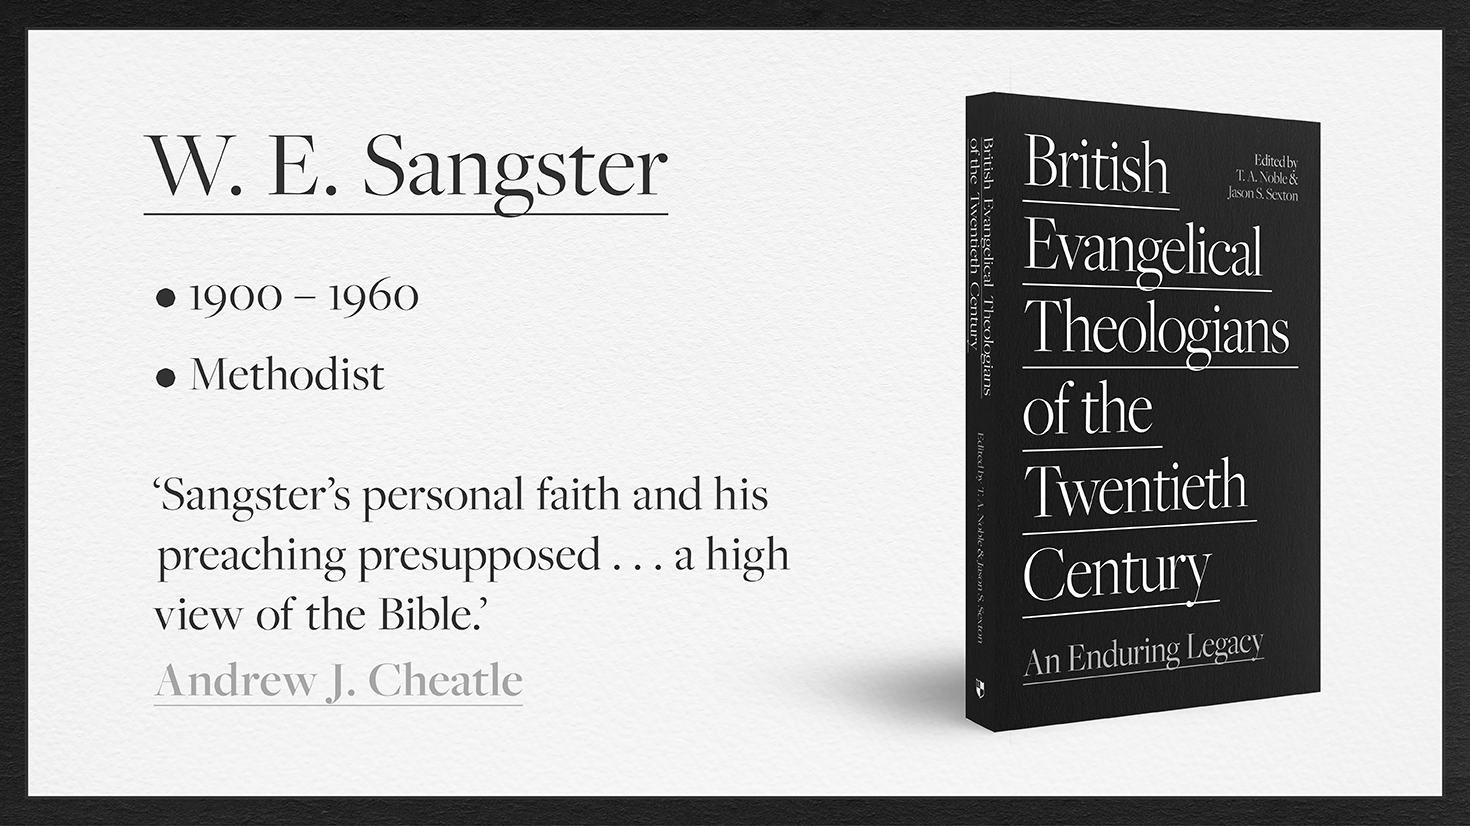 W. E. Sangster: British Evangelical Theologian of the Twentieth Century